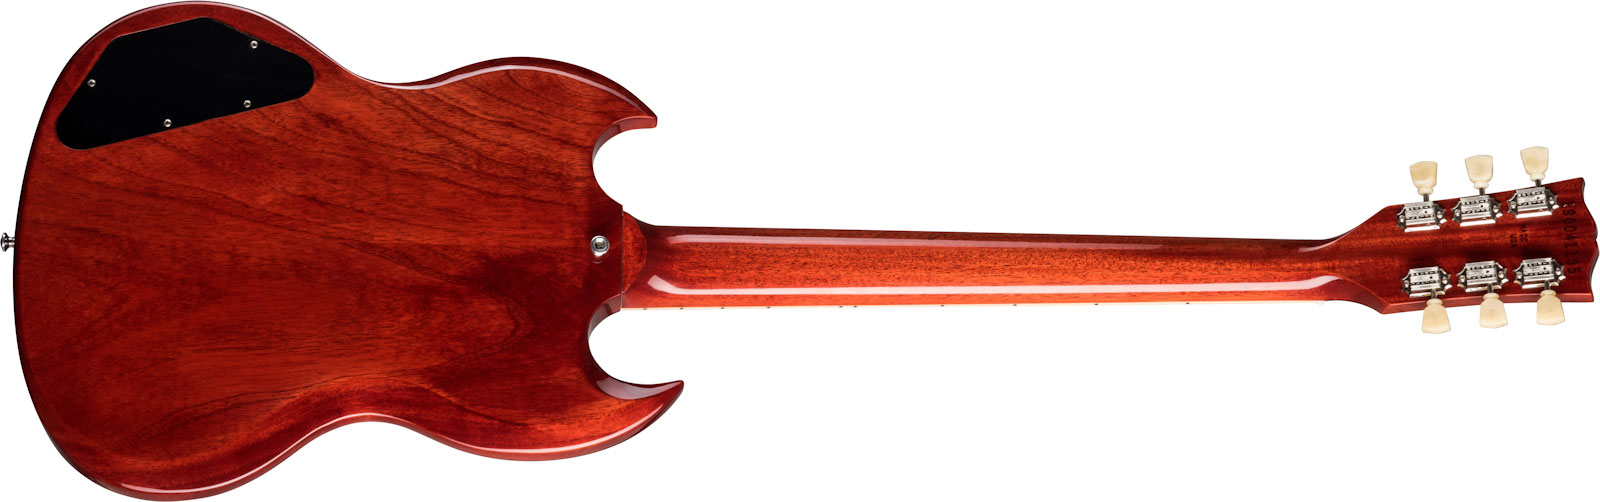 Gibson Sg Standard '61 Sideways Vibrola Original 2h Ht Rw - Vintage Cherry - Retro rock electric guitar - Variation 1